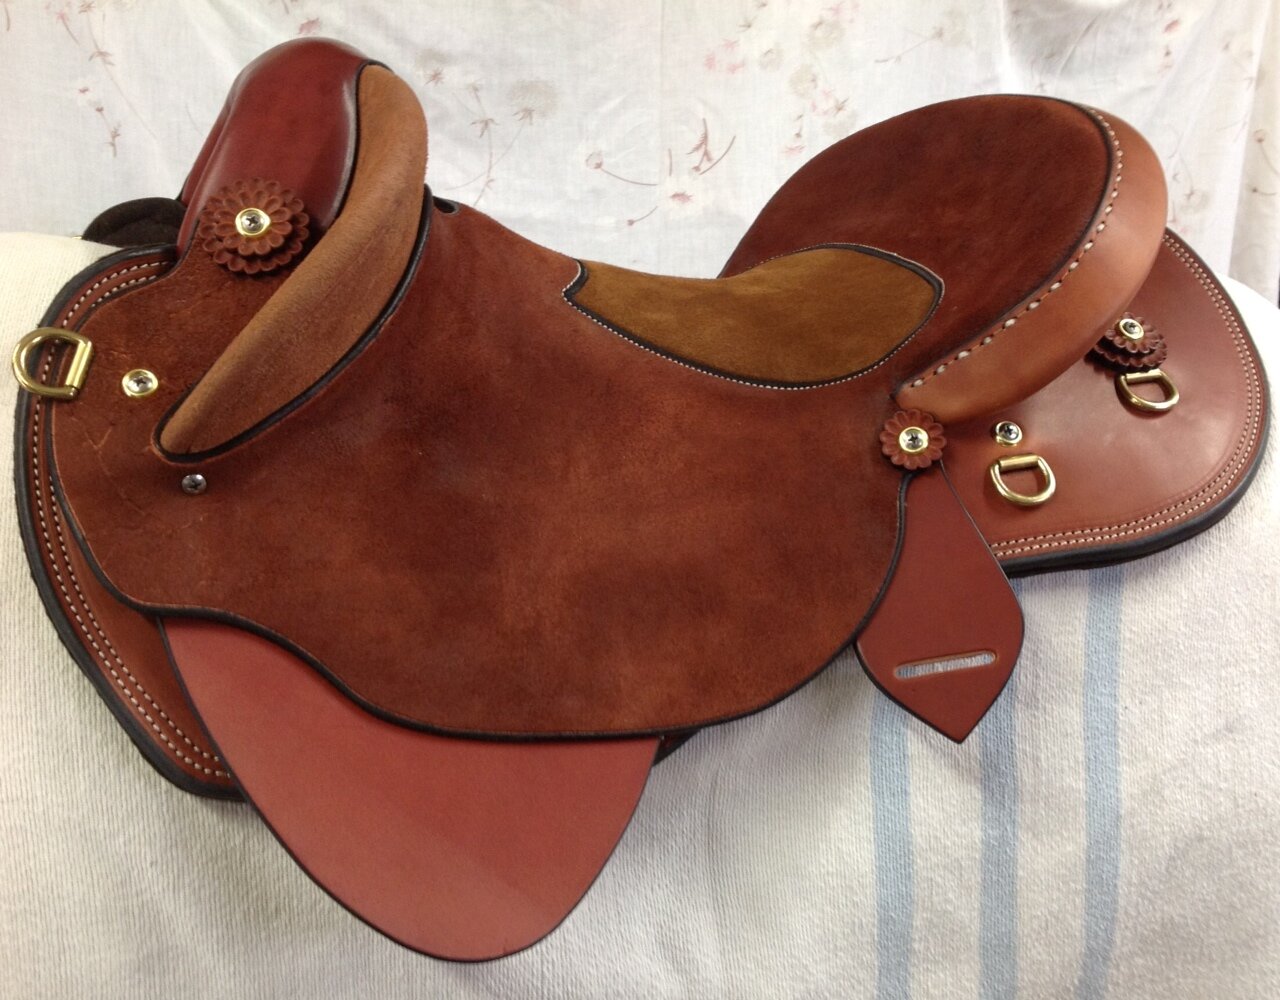 saddle for sale 2014.JPG